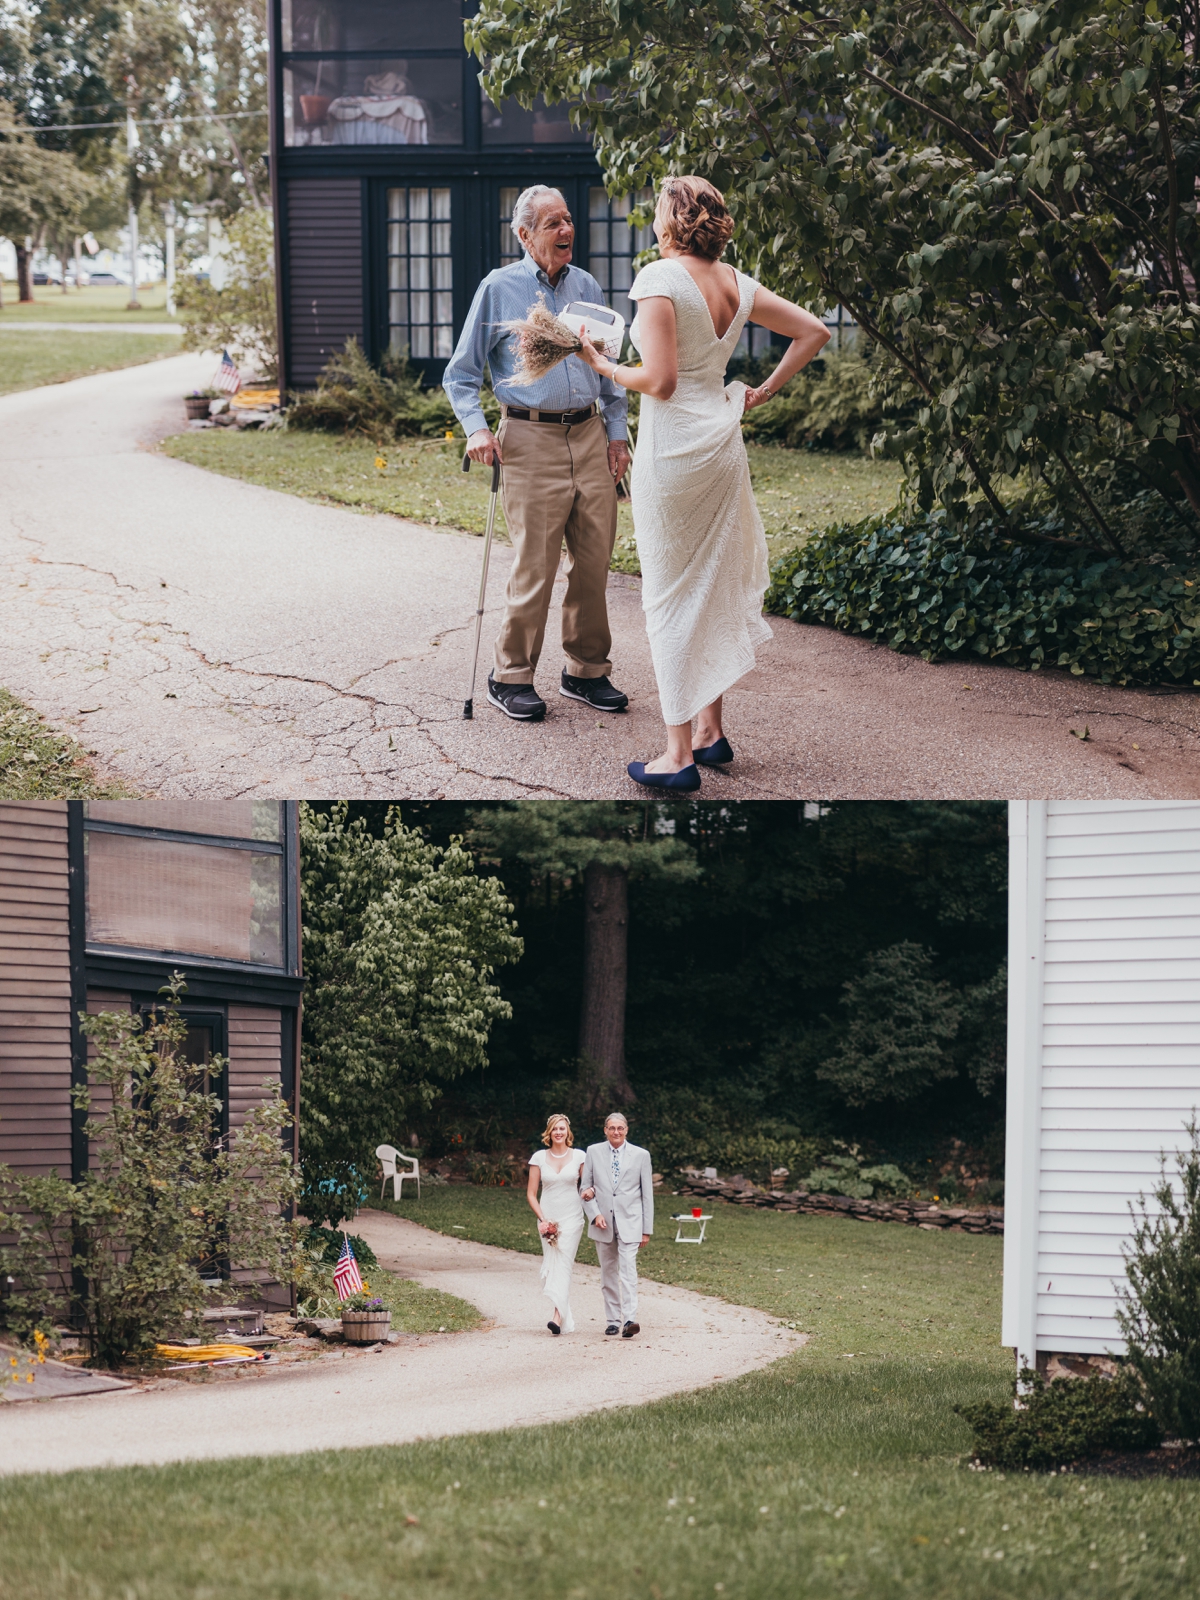 Outdoor wedding ceremony in Sturbridge, Massachusetts